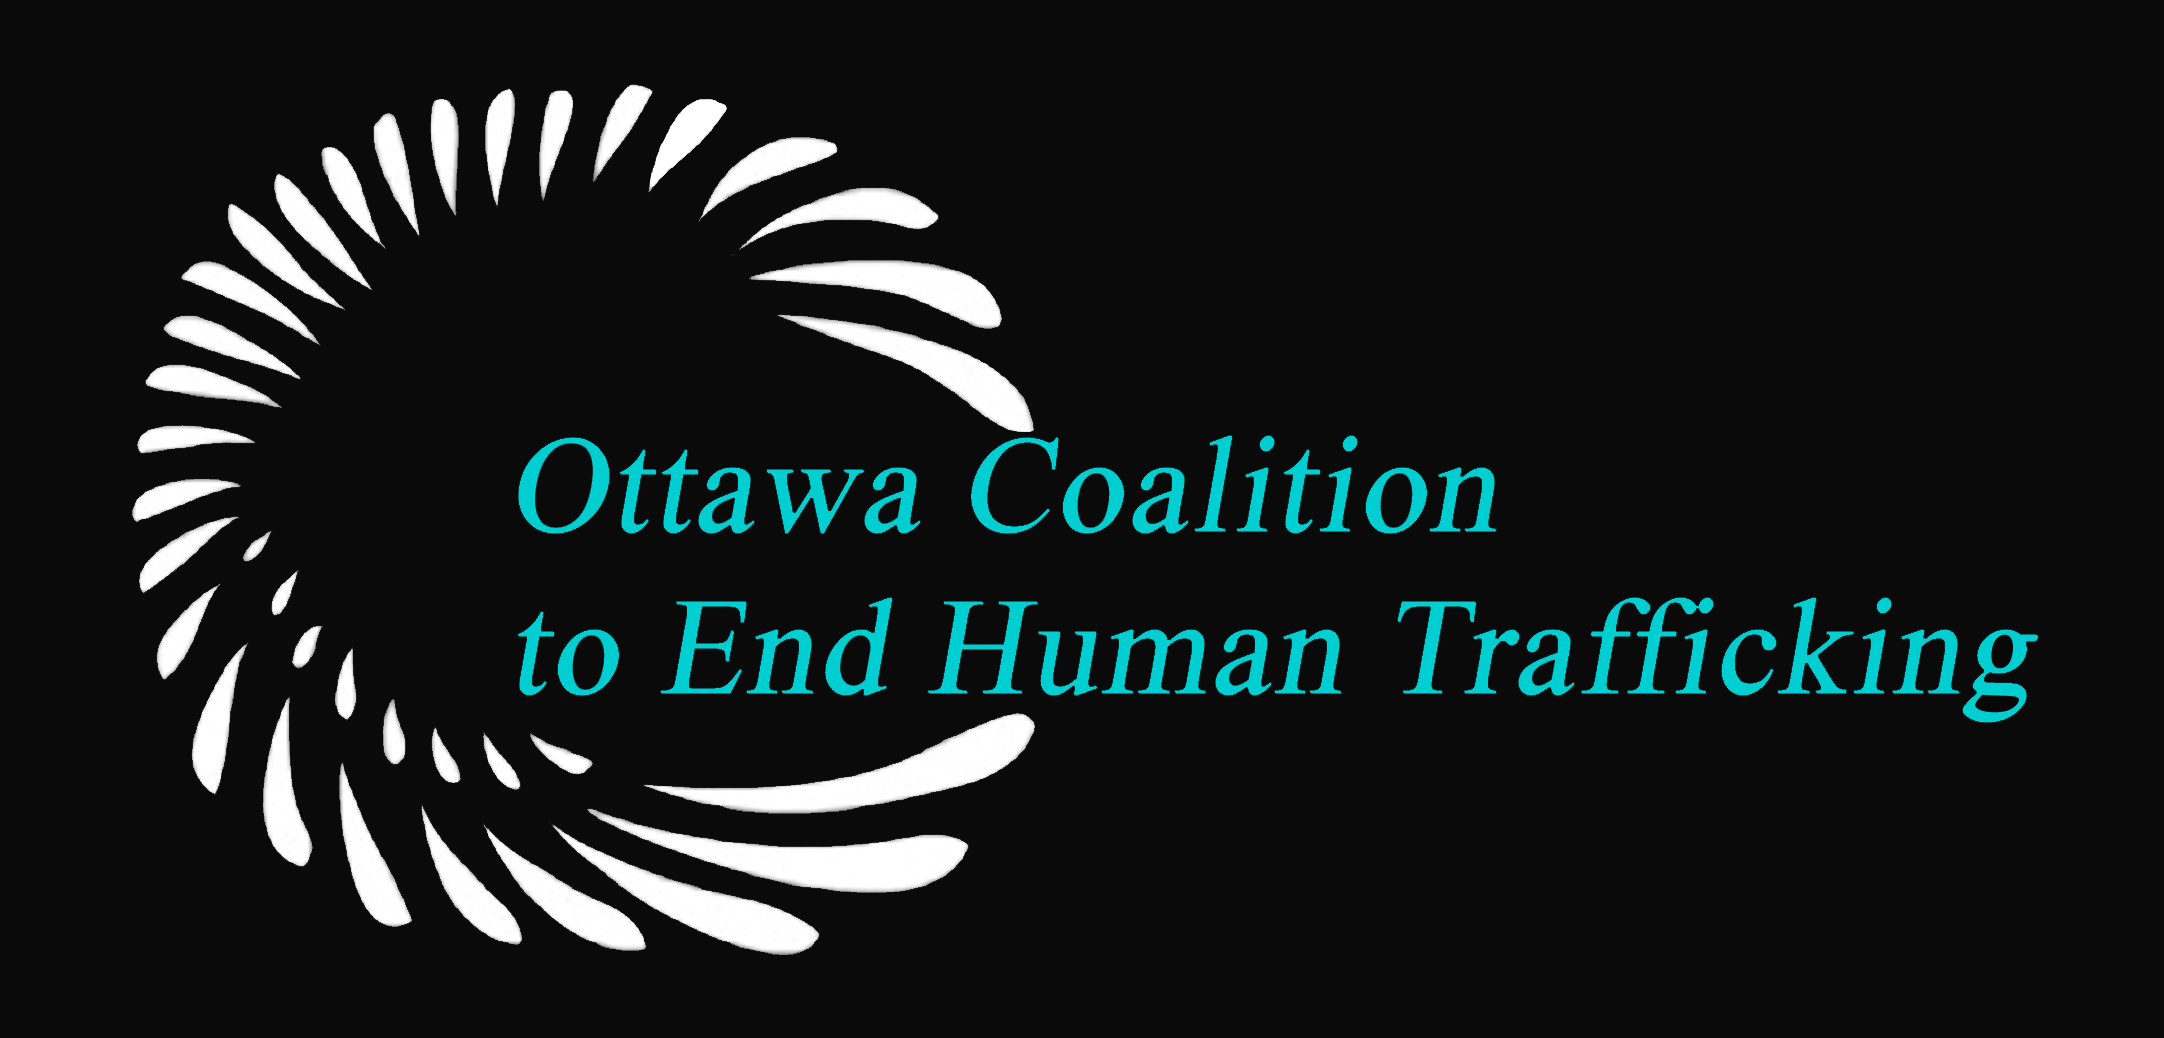 Ottawa Coalition to End Human Trafficking